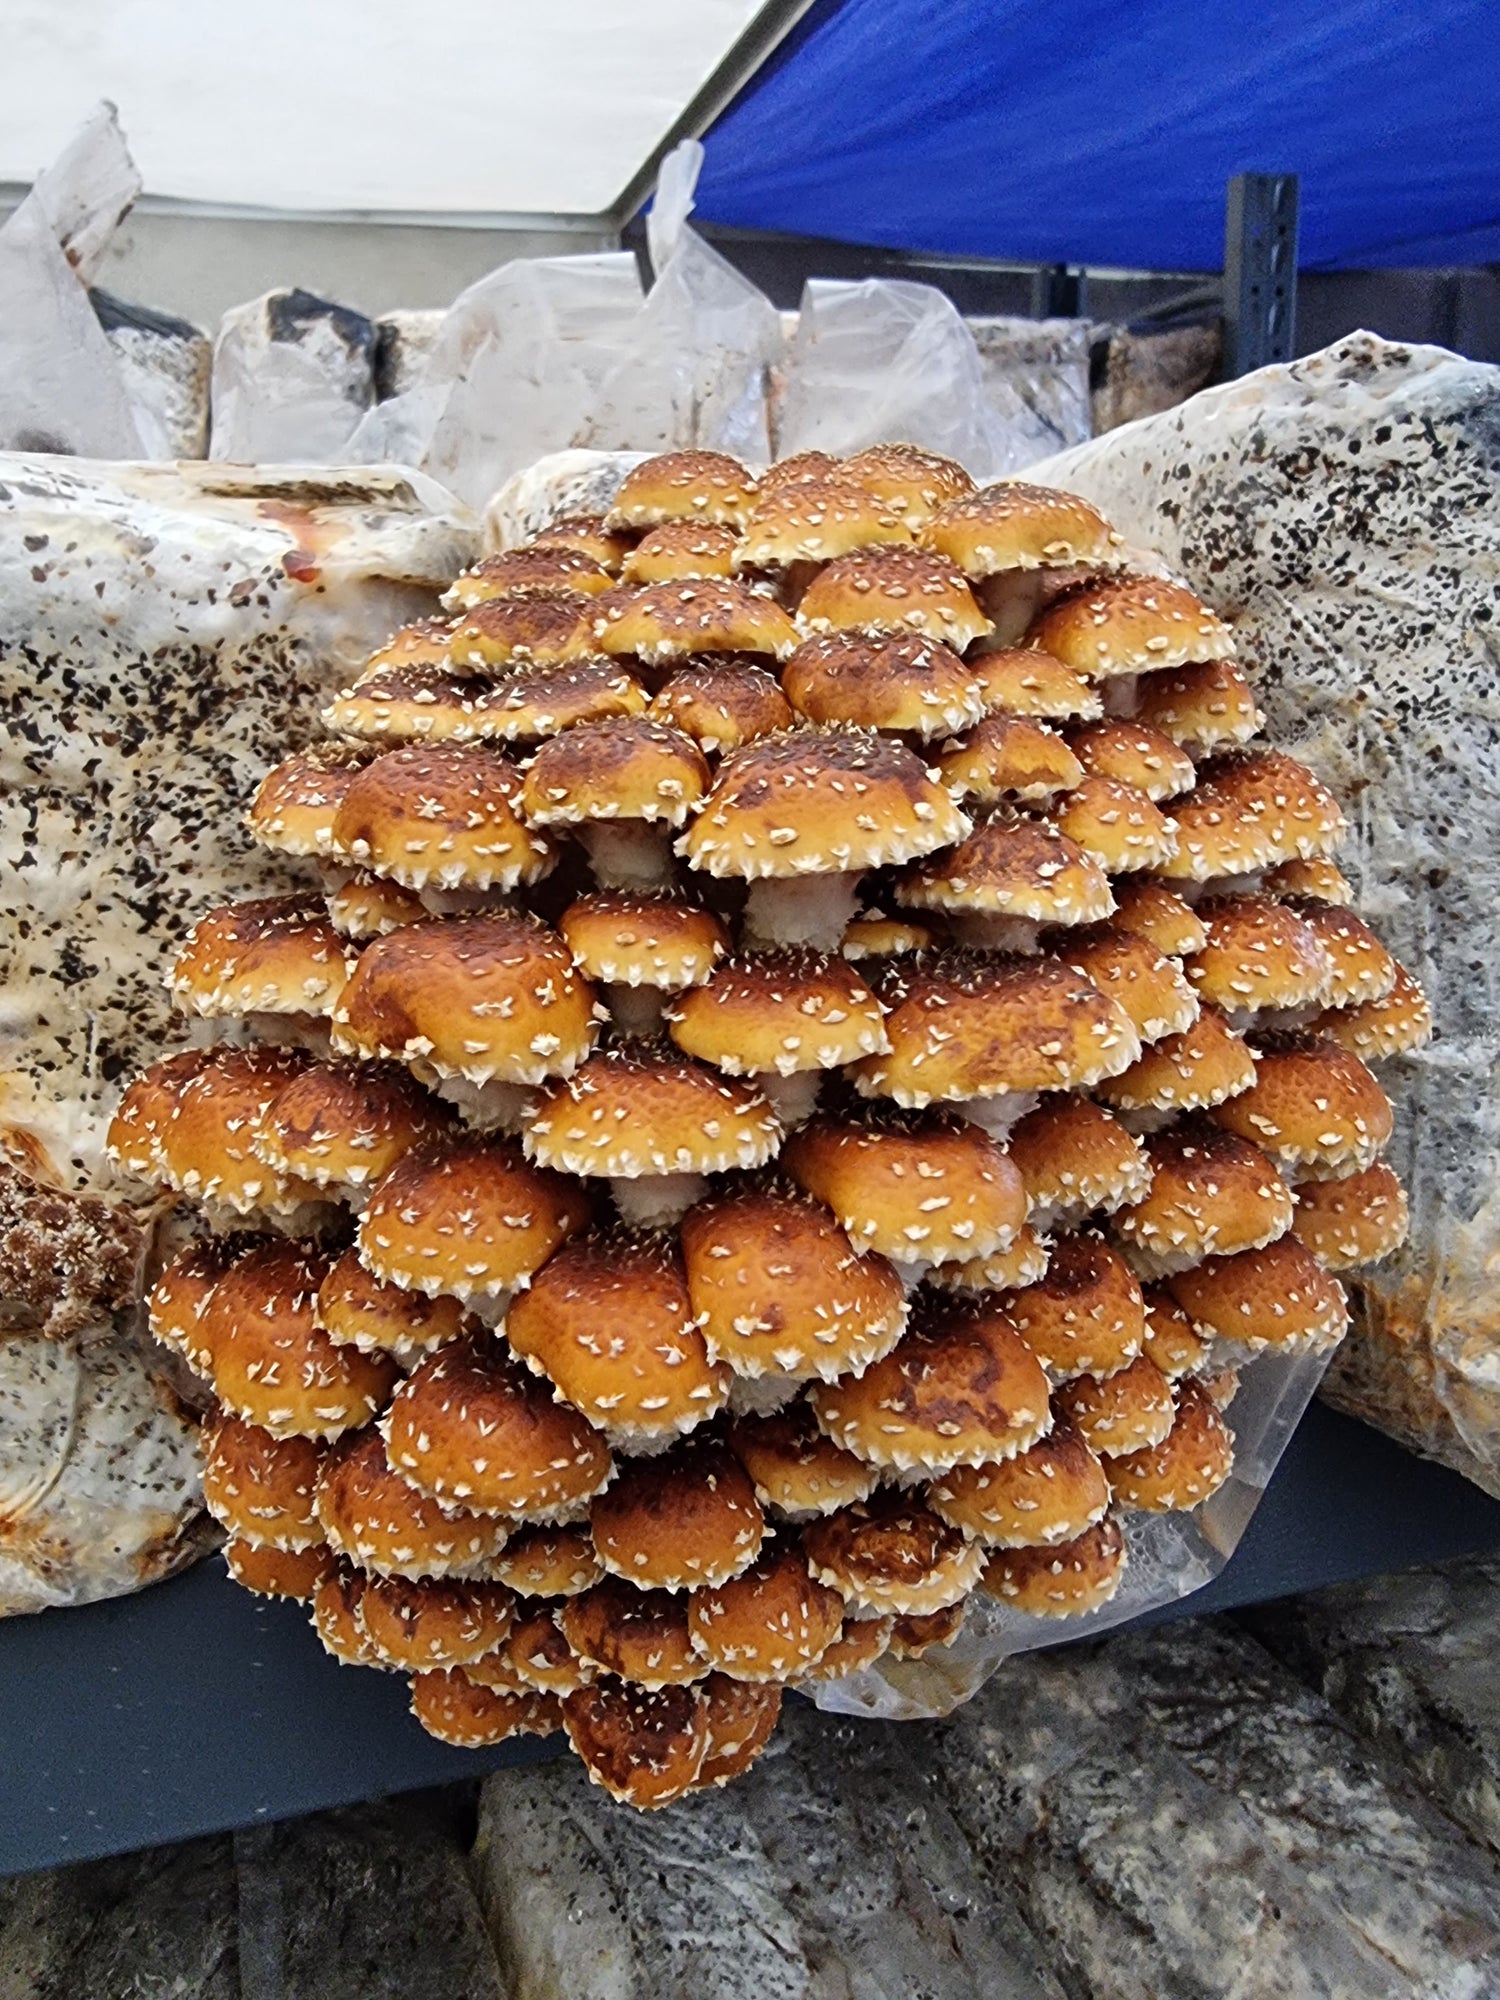 Chesnut mushrooms 